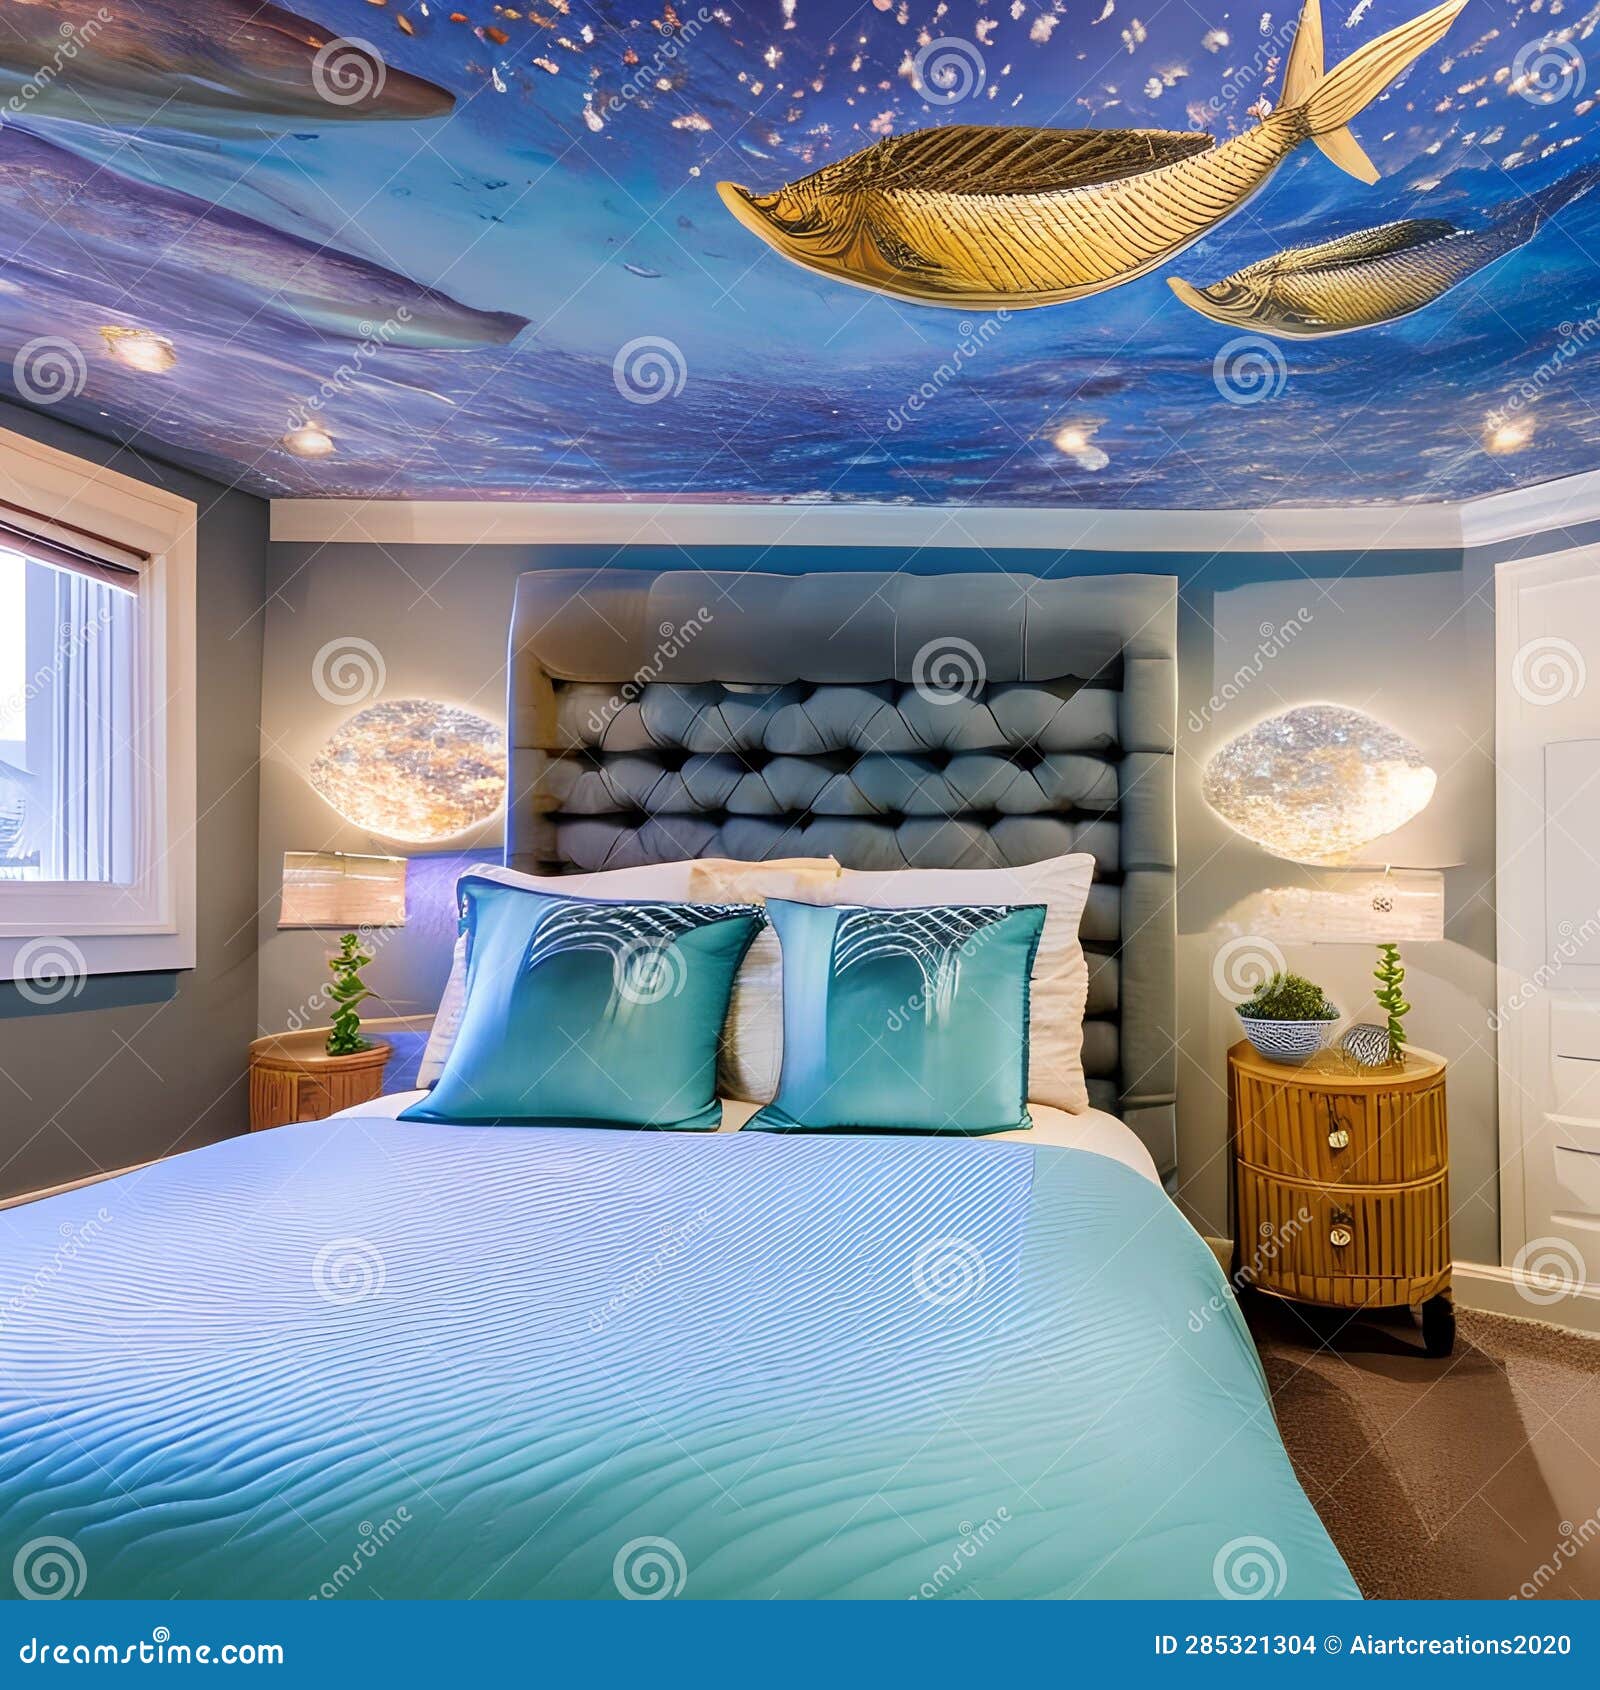 https://thumbs.dreamstime.com/z/enchanted-underwater-mermaid-themed-bedroom-seashell-bed-iridescent-decor-ocean-murals-enchanted-underwater-285321304.jpg